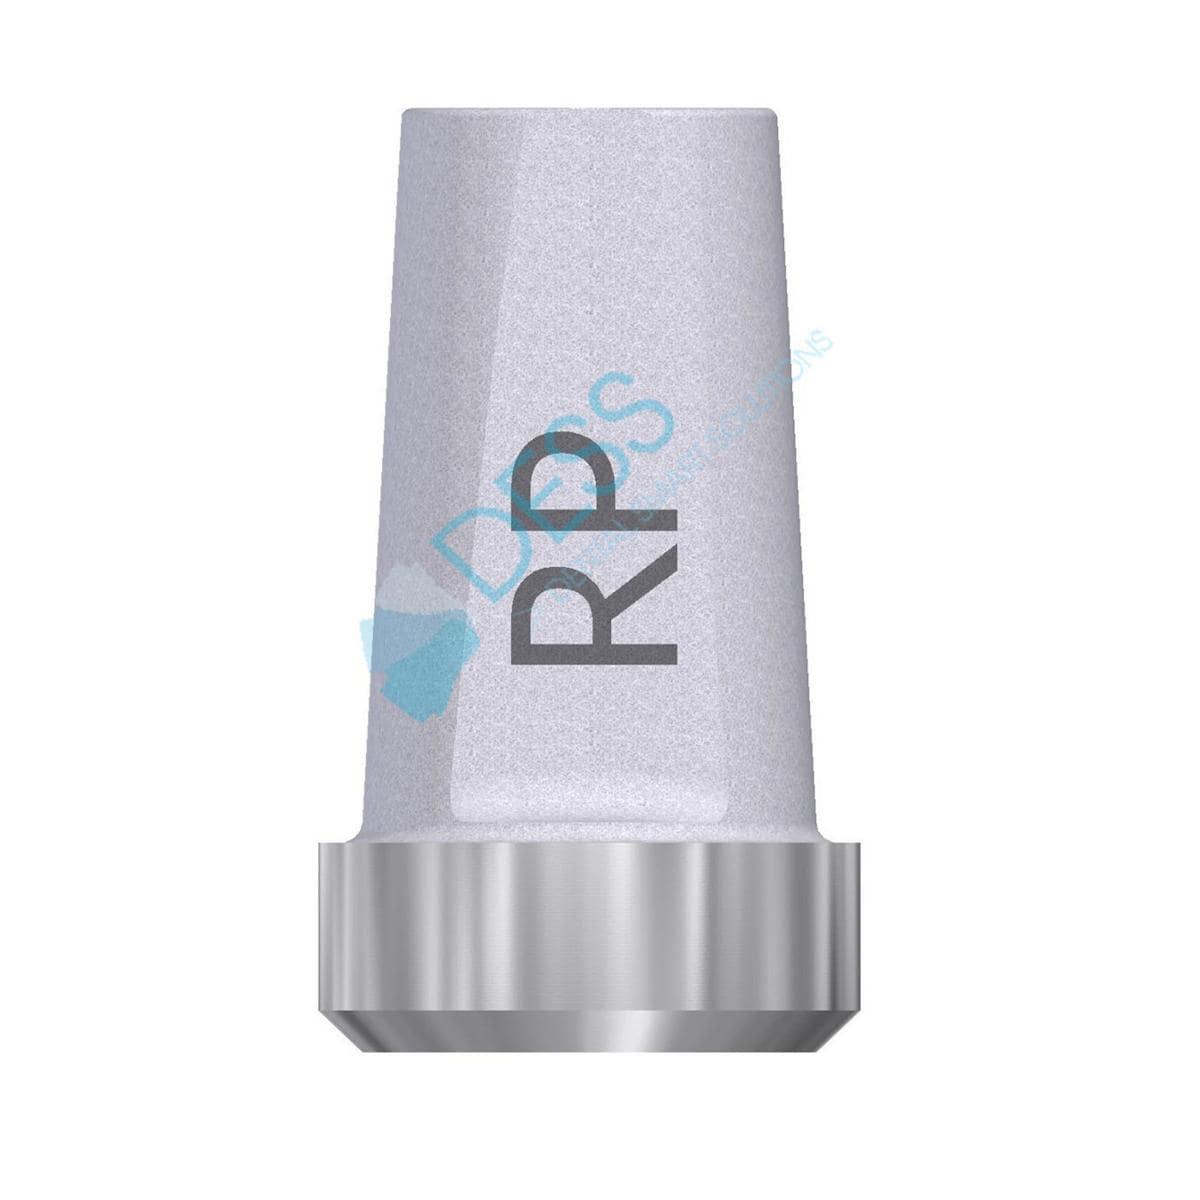 Titanabutment - kompatibel mit Nobel Branemark® - RP Ø 4,1 mm, 0° gewinkelt